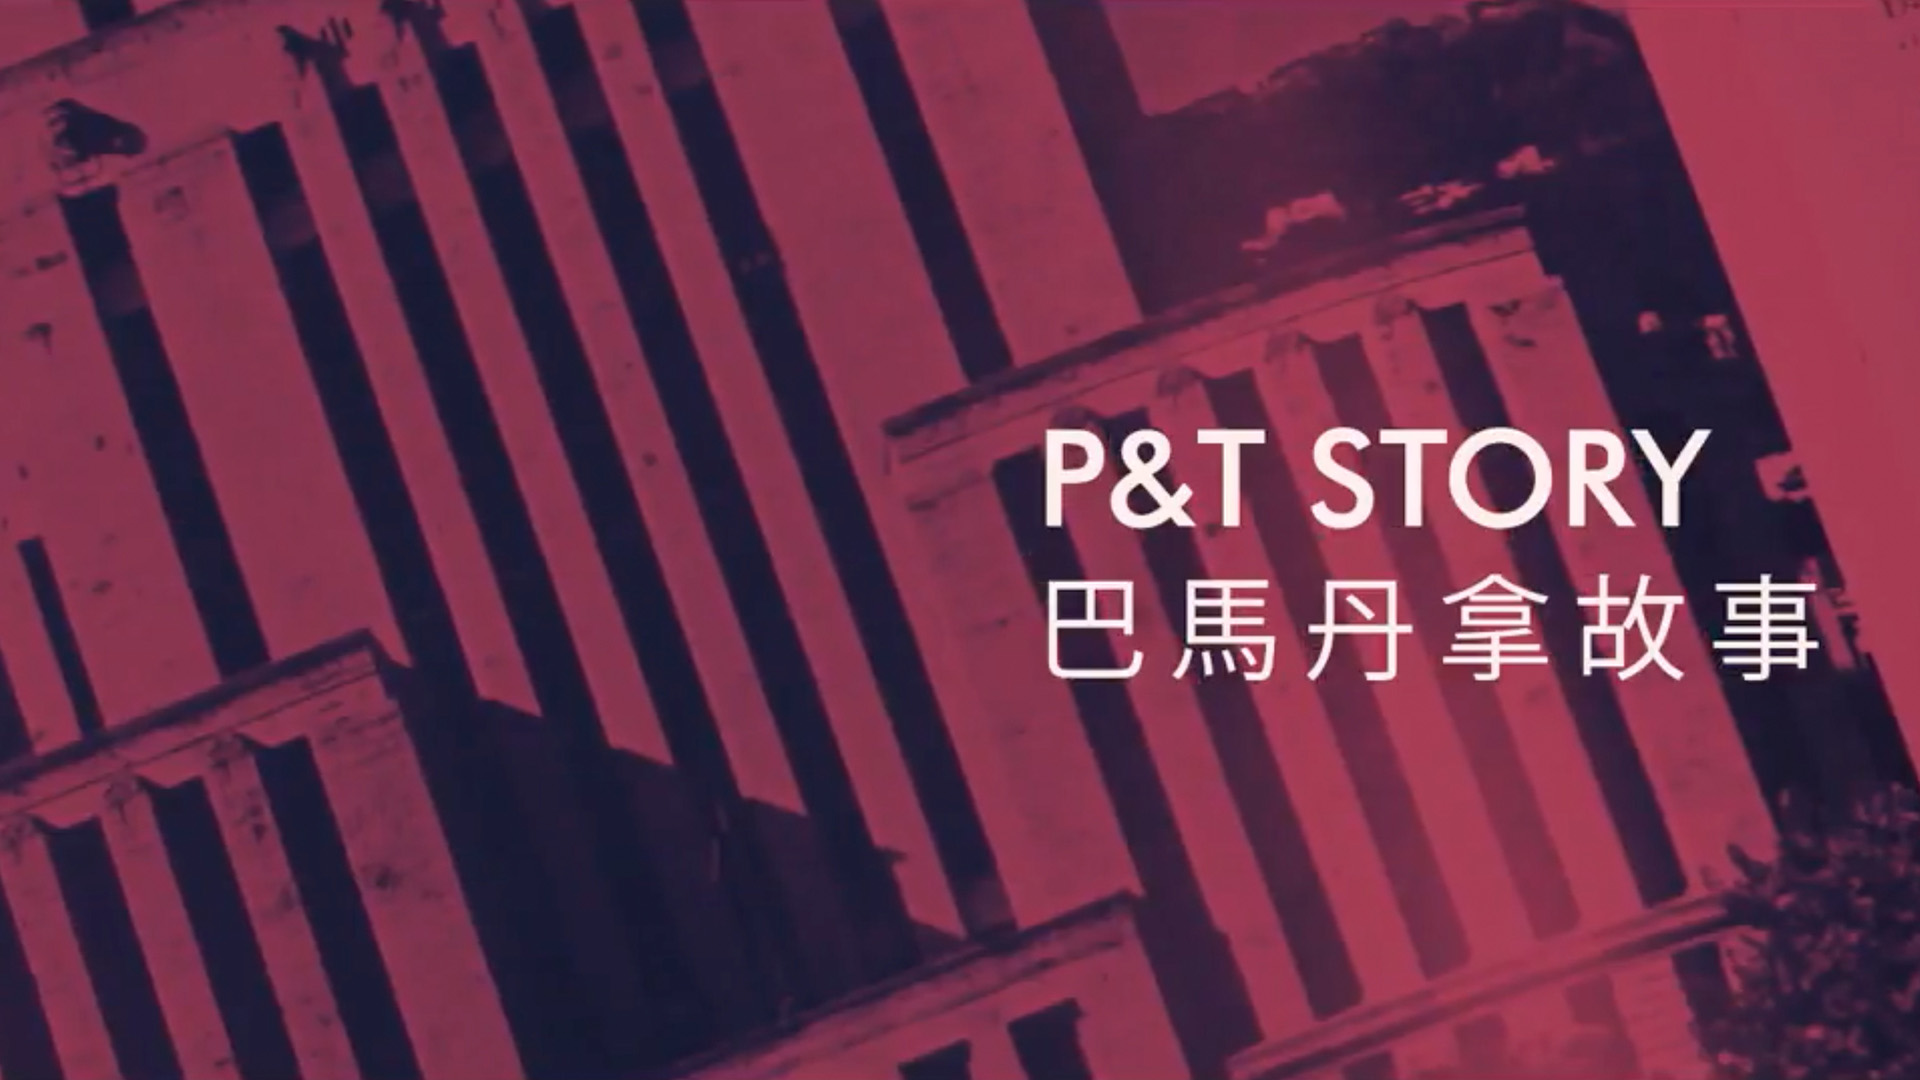 D2 Studio 市場營銷策劃與品牌策劃香港及廣州中國為P&T安排的企業視頻製作The production of corporate videos 5